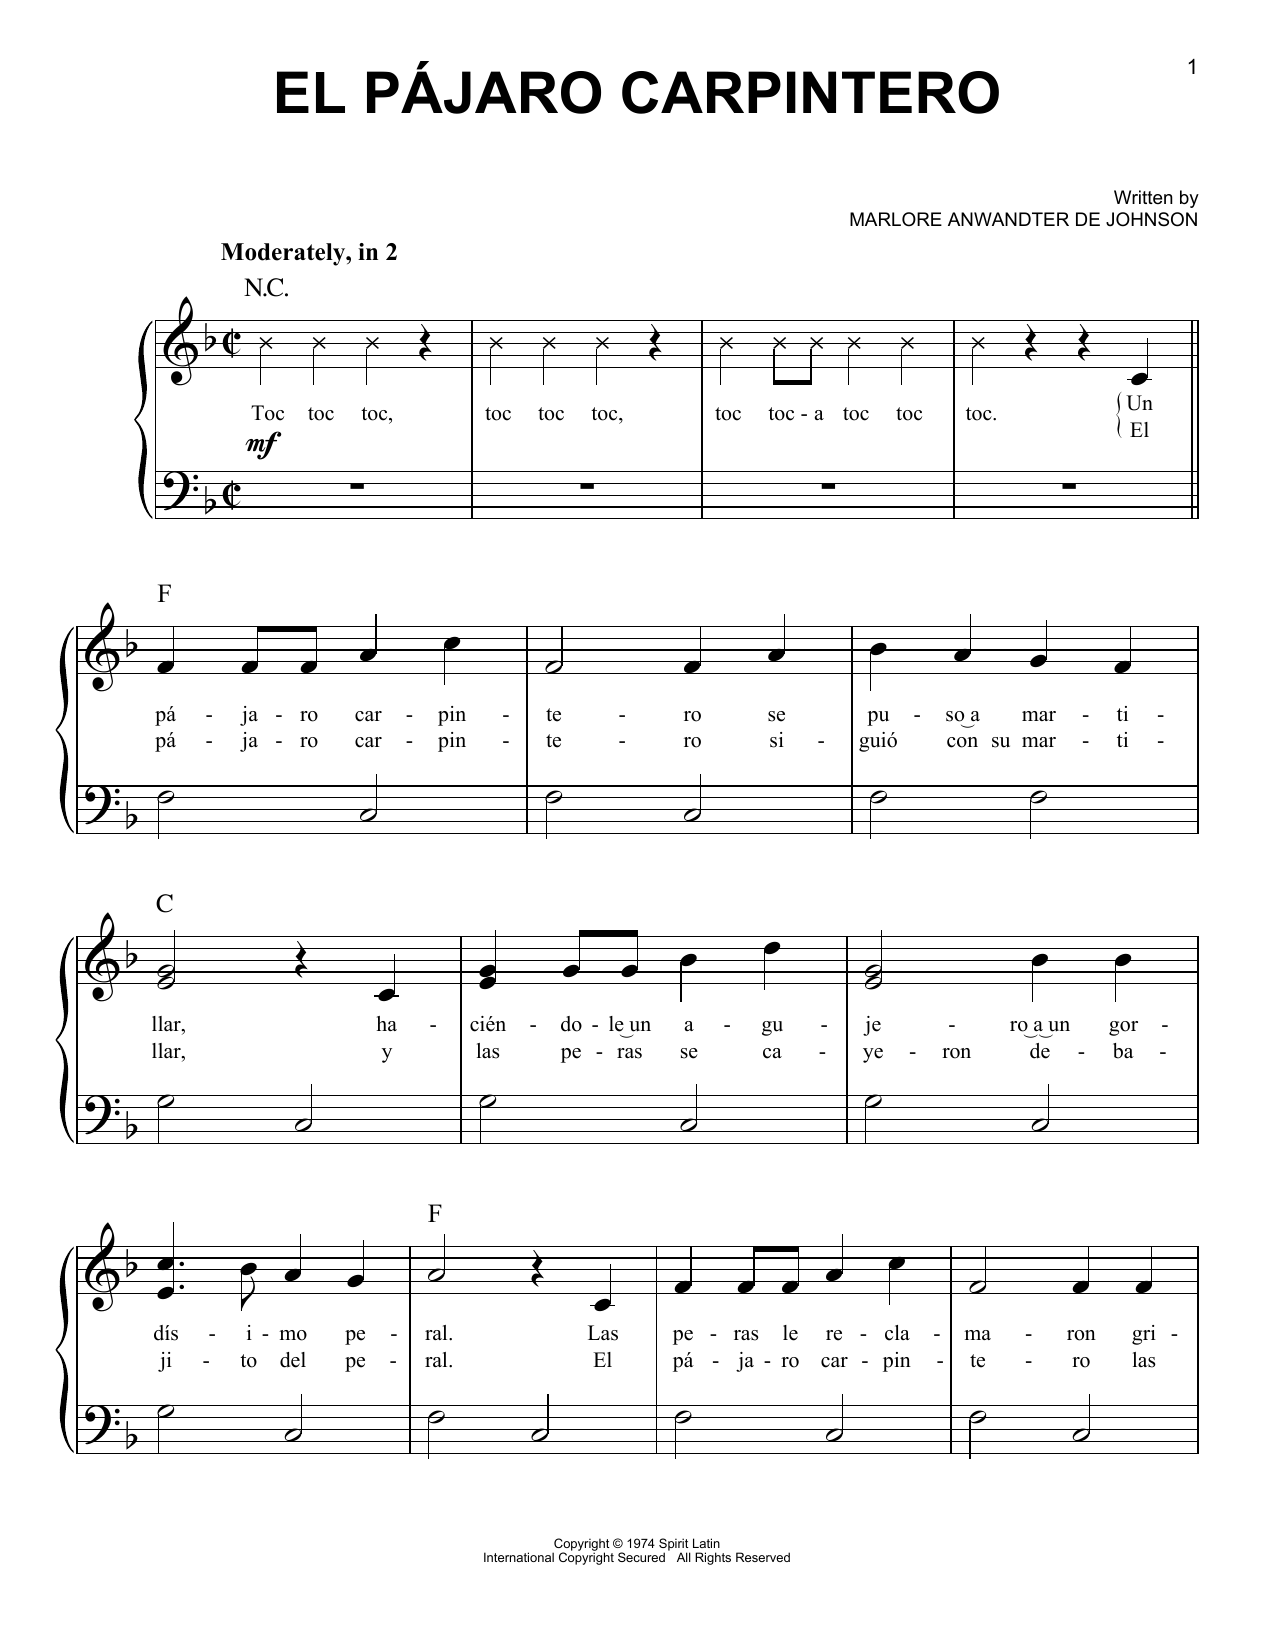 Marlore Anwandter de Johnson El Pajaro Carpintero Sheet Music Notes & Chords for Easy Piano - Download or Print PDF